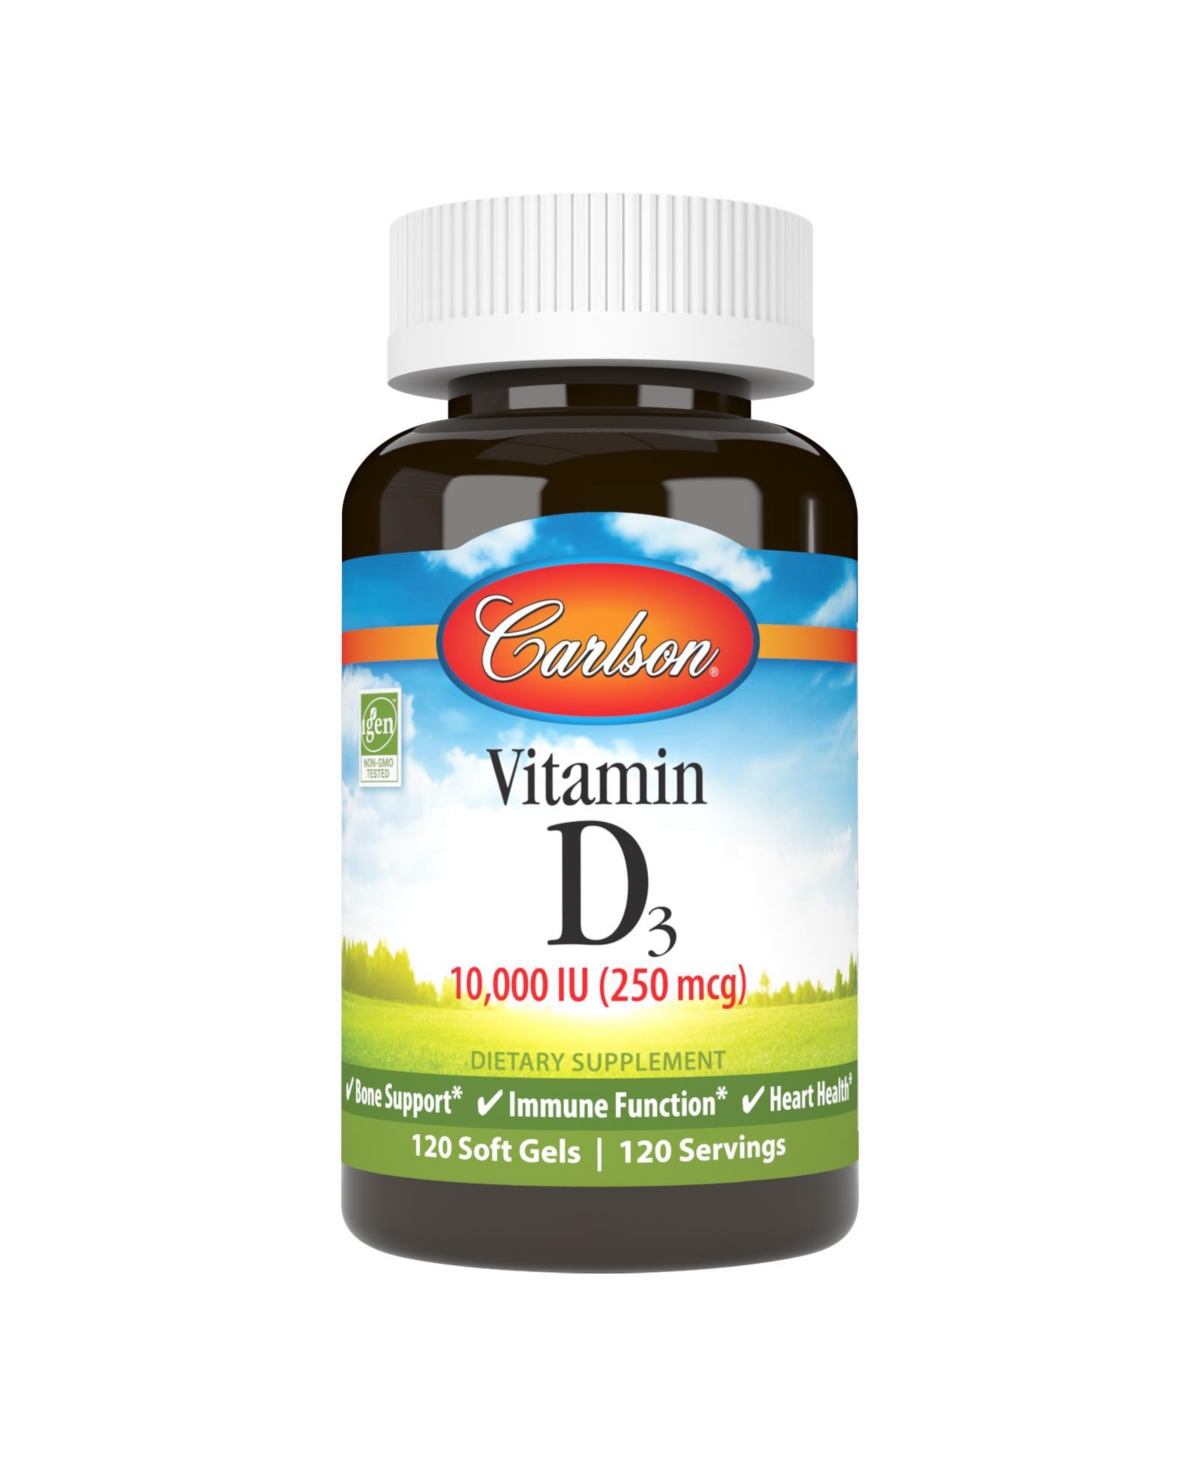 Carlson - Vitamin D3 10000 Iu (250 mcg), Cholecalciferol, Immune Support, 120 Softgels - Assorted Pre-Pack